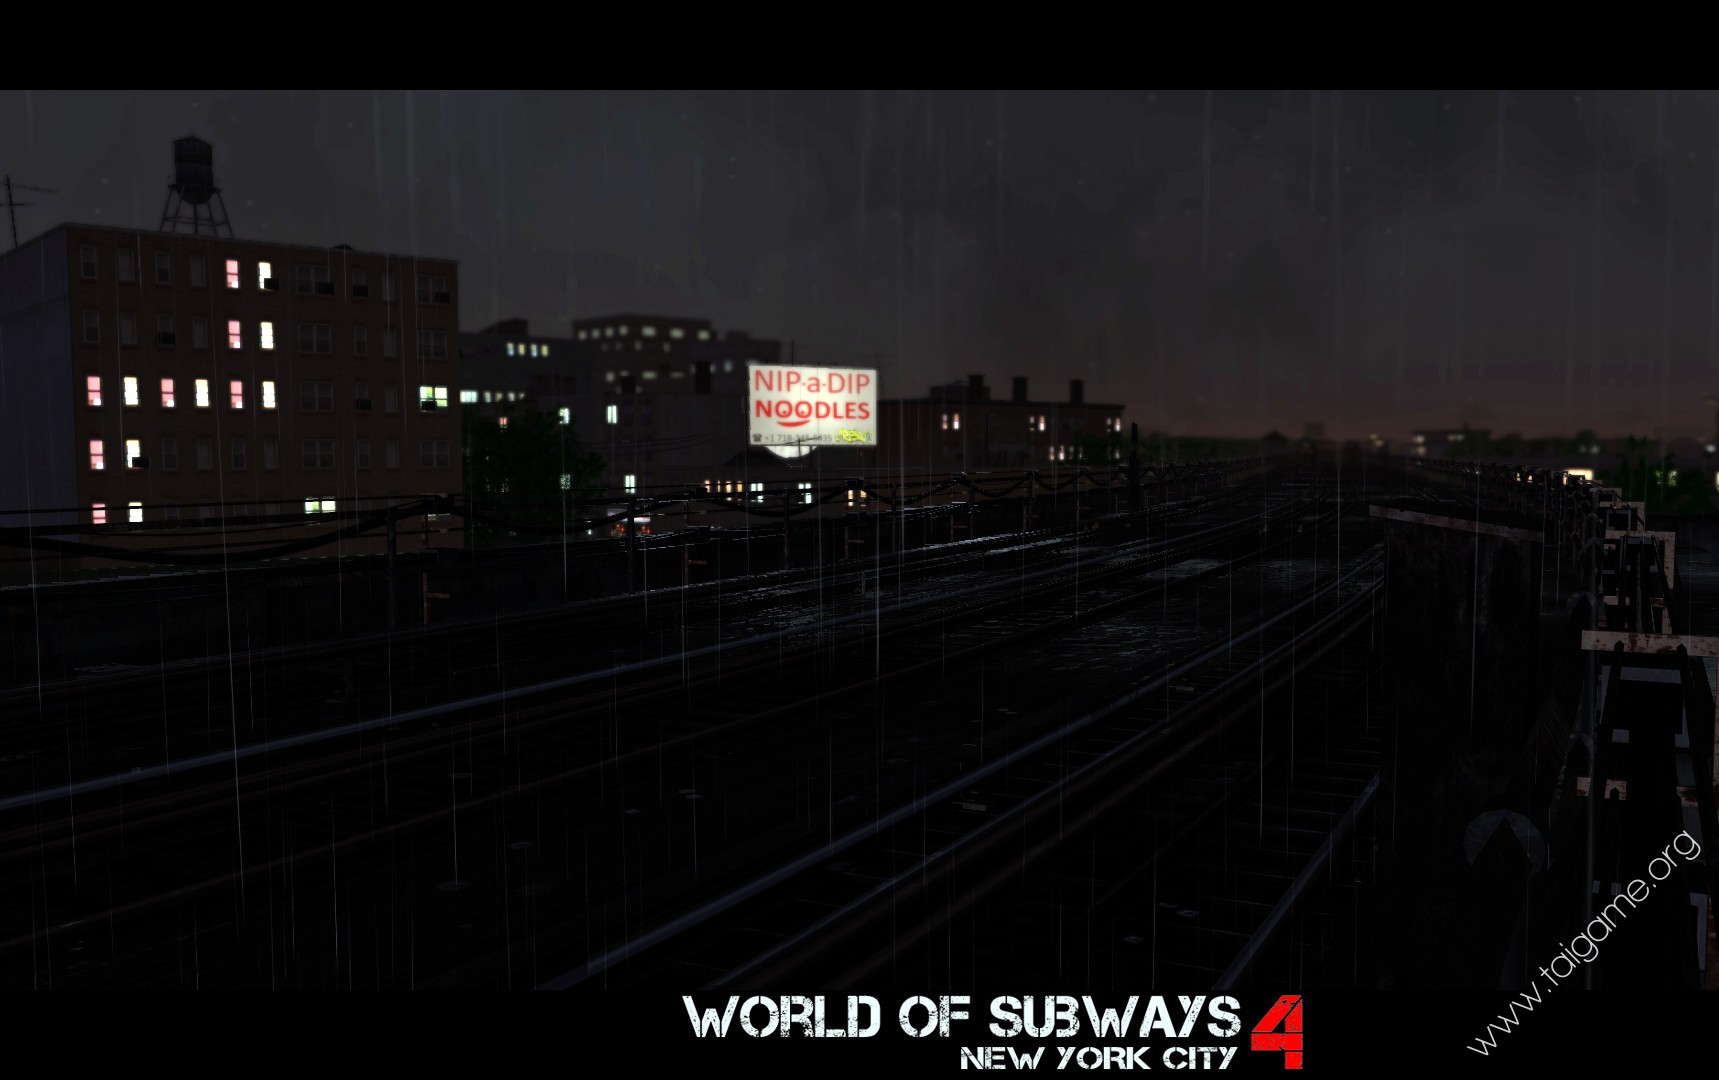 World of subways vol 5